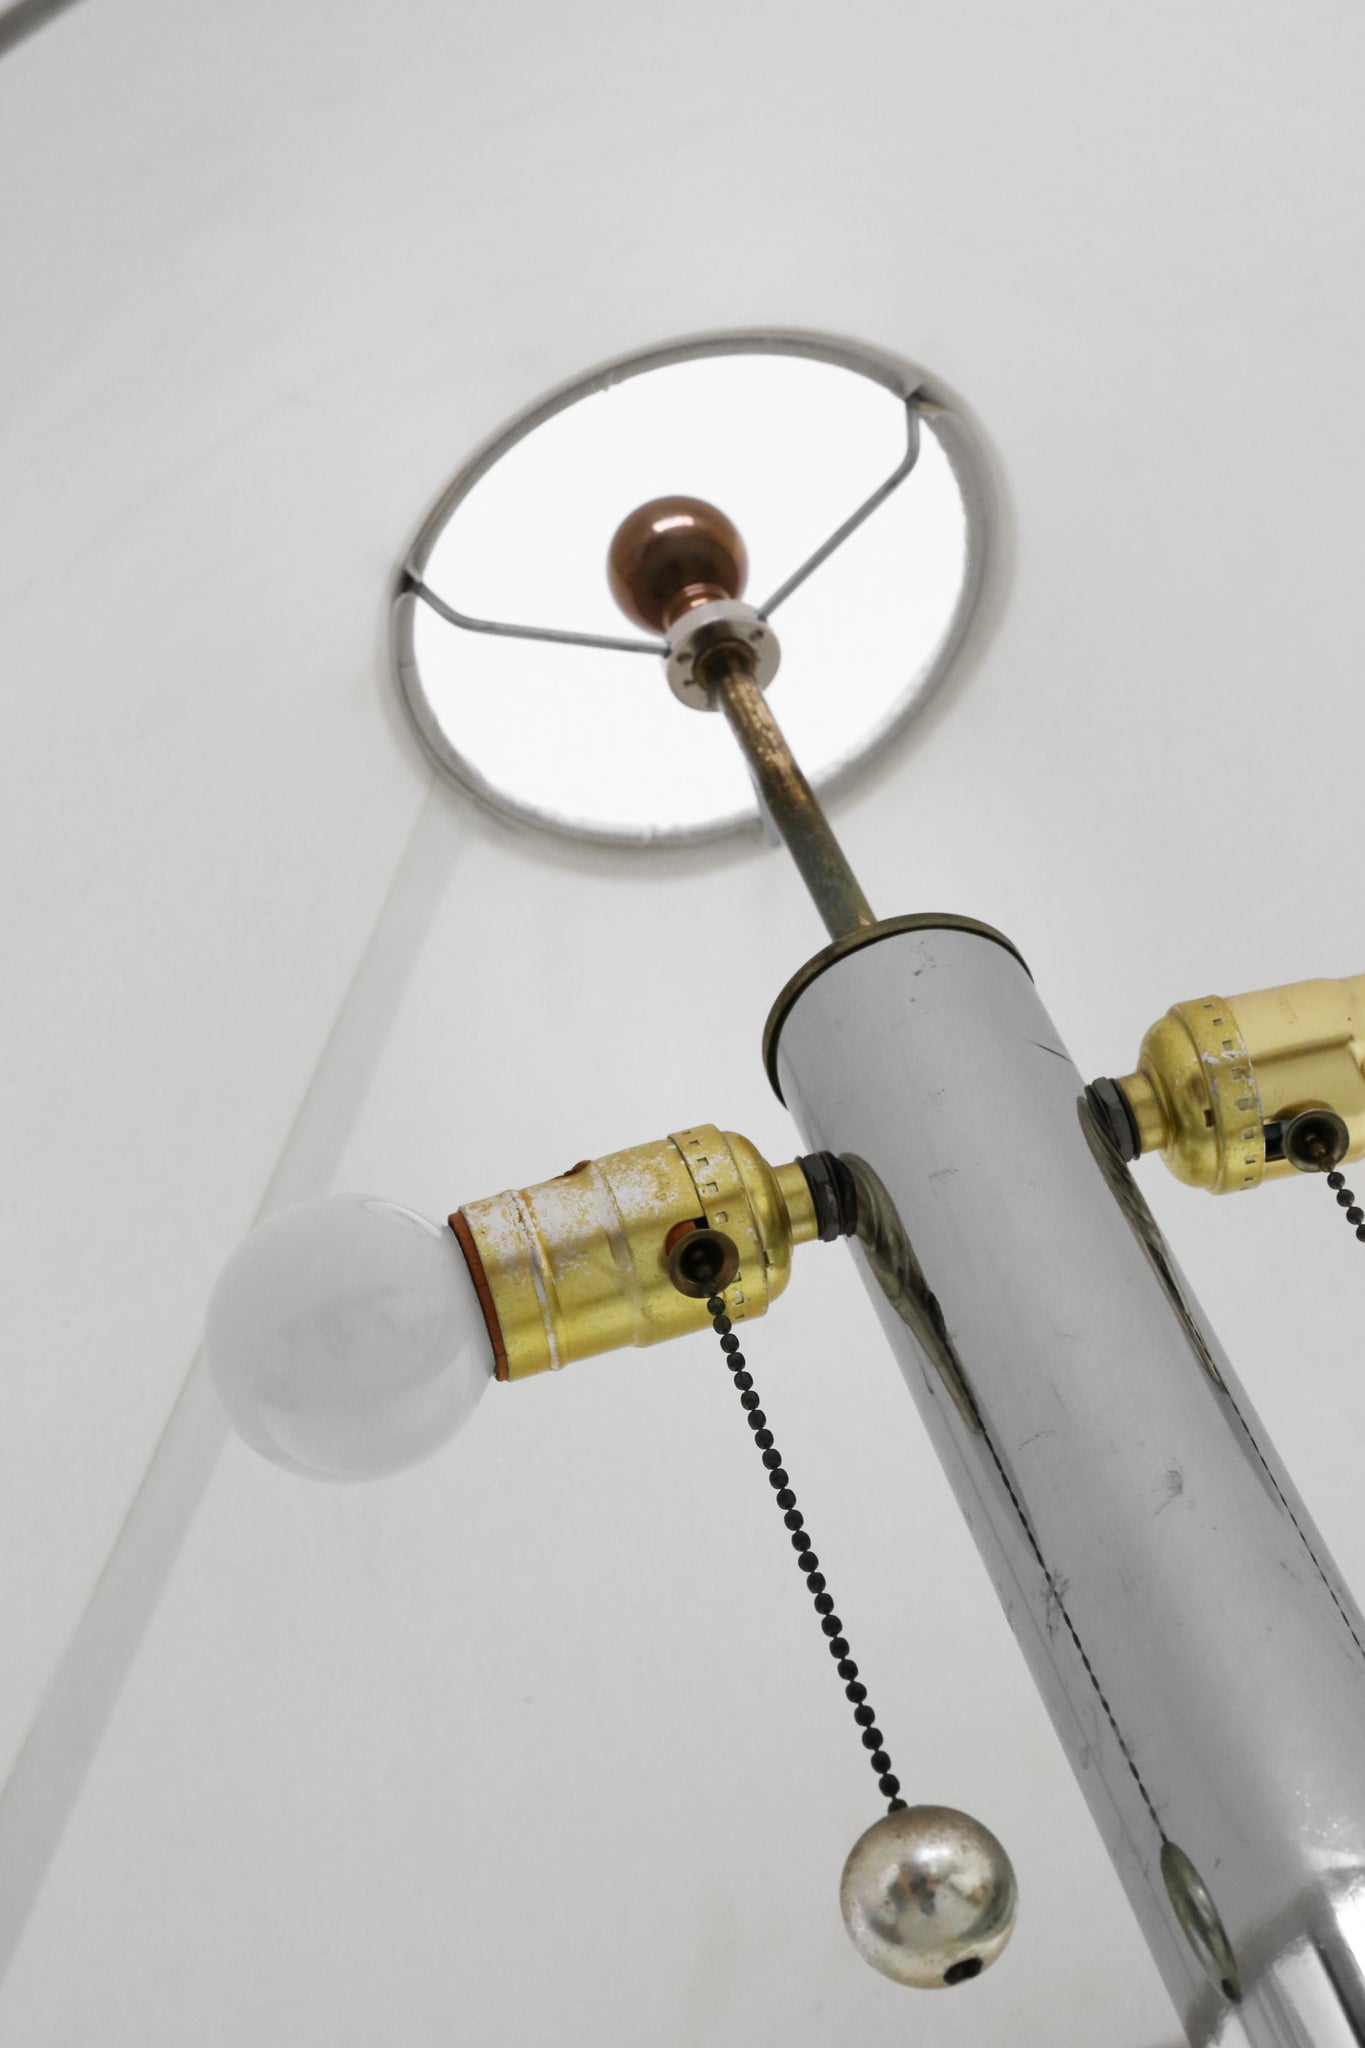 Two-tone Modernist Floor Lamp